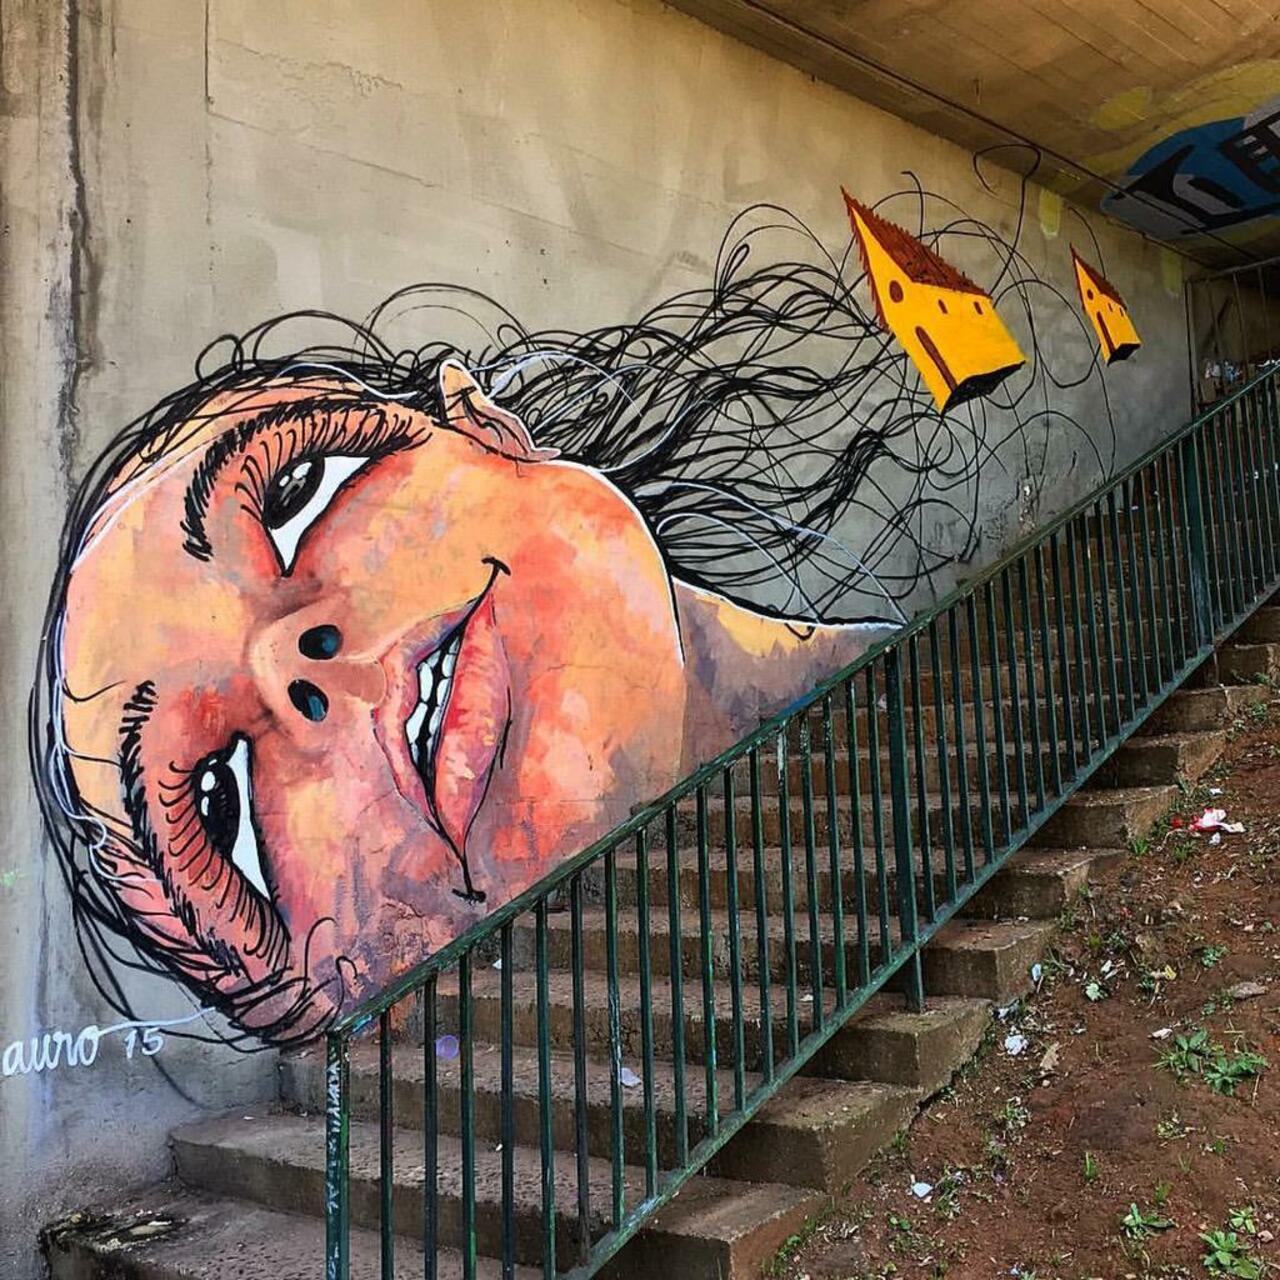 RT belilac "RT belilac "RT belilac "Street Art by Reveracidade in São Paulo 

#art #graffiti #mural #streetart http://t.co/ExUXoIutkT"""